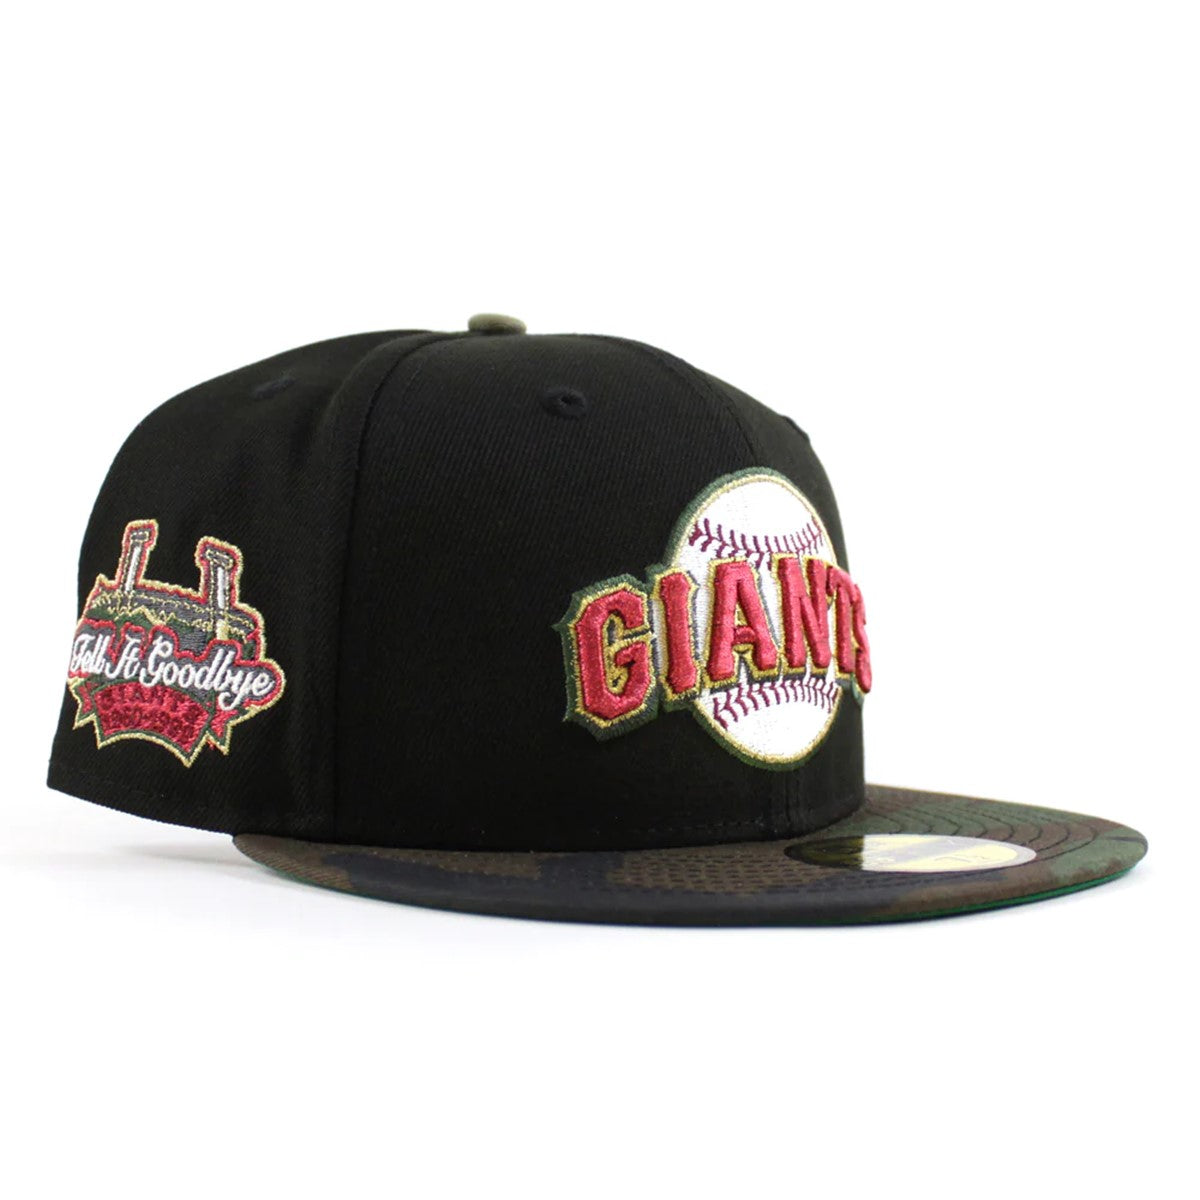 NEW ERA San Francisco Giants - 59FIFTY TELL IT GOODBYE BLACK/WD CAMO